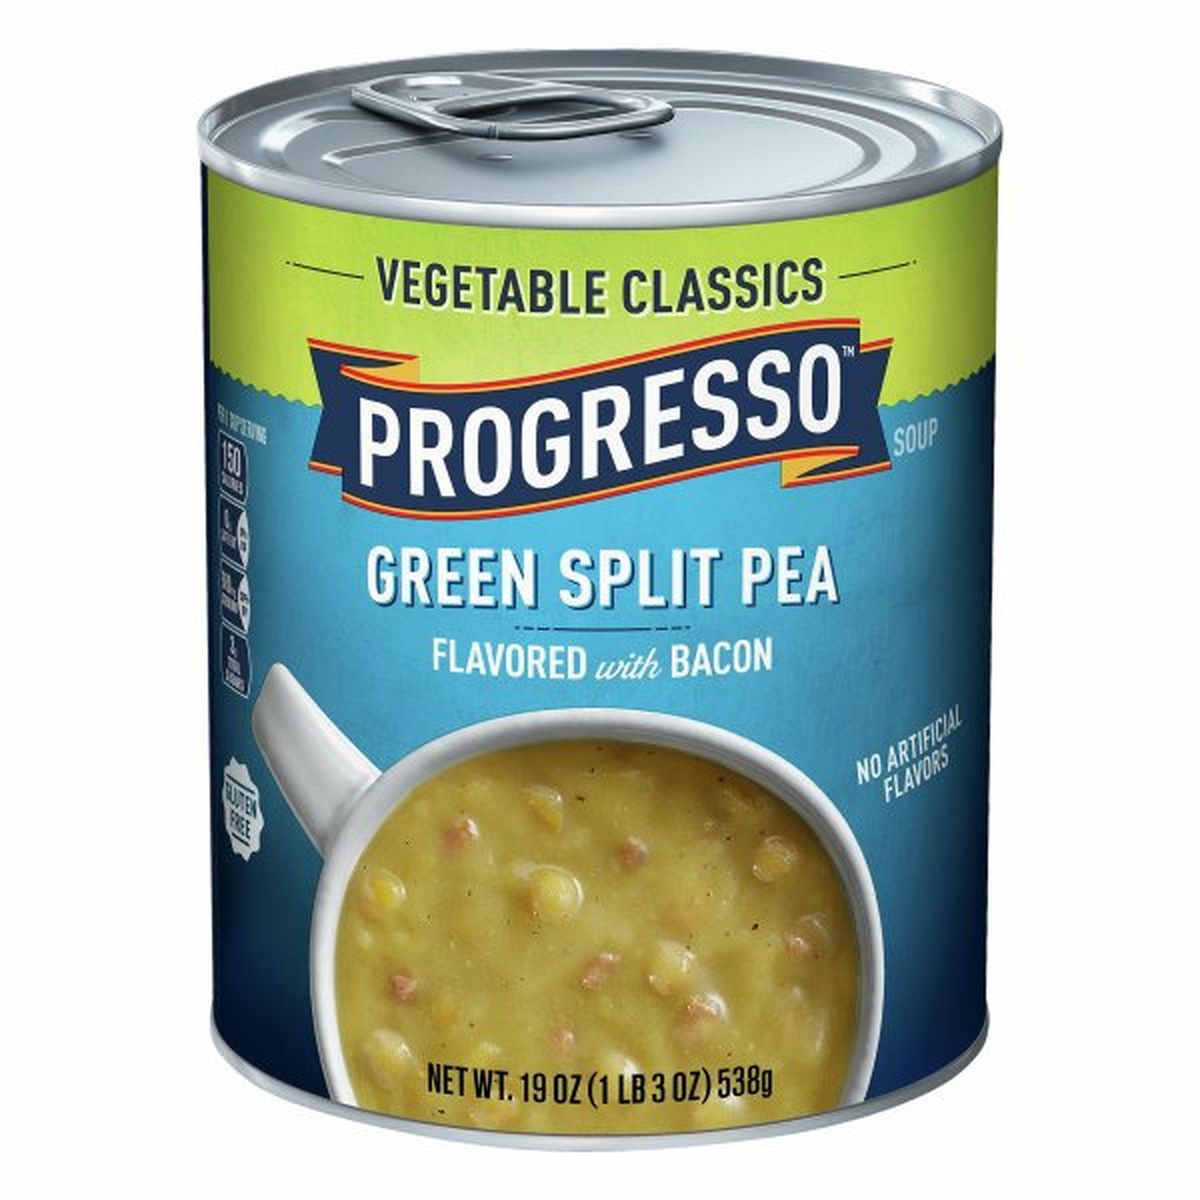 Calories in Progresso Vegetable Classics Soup, Green Split Pea